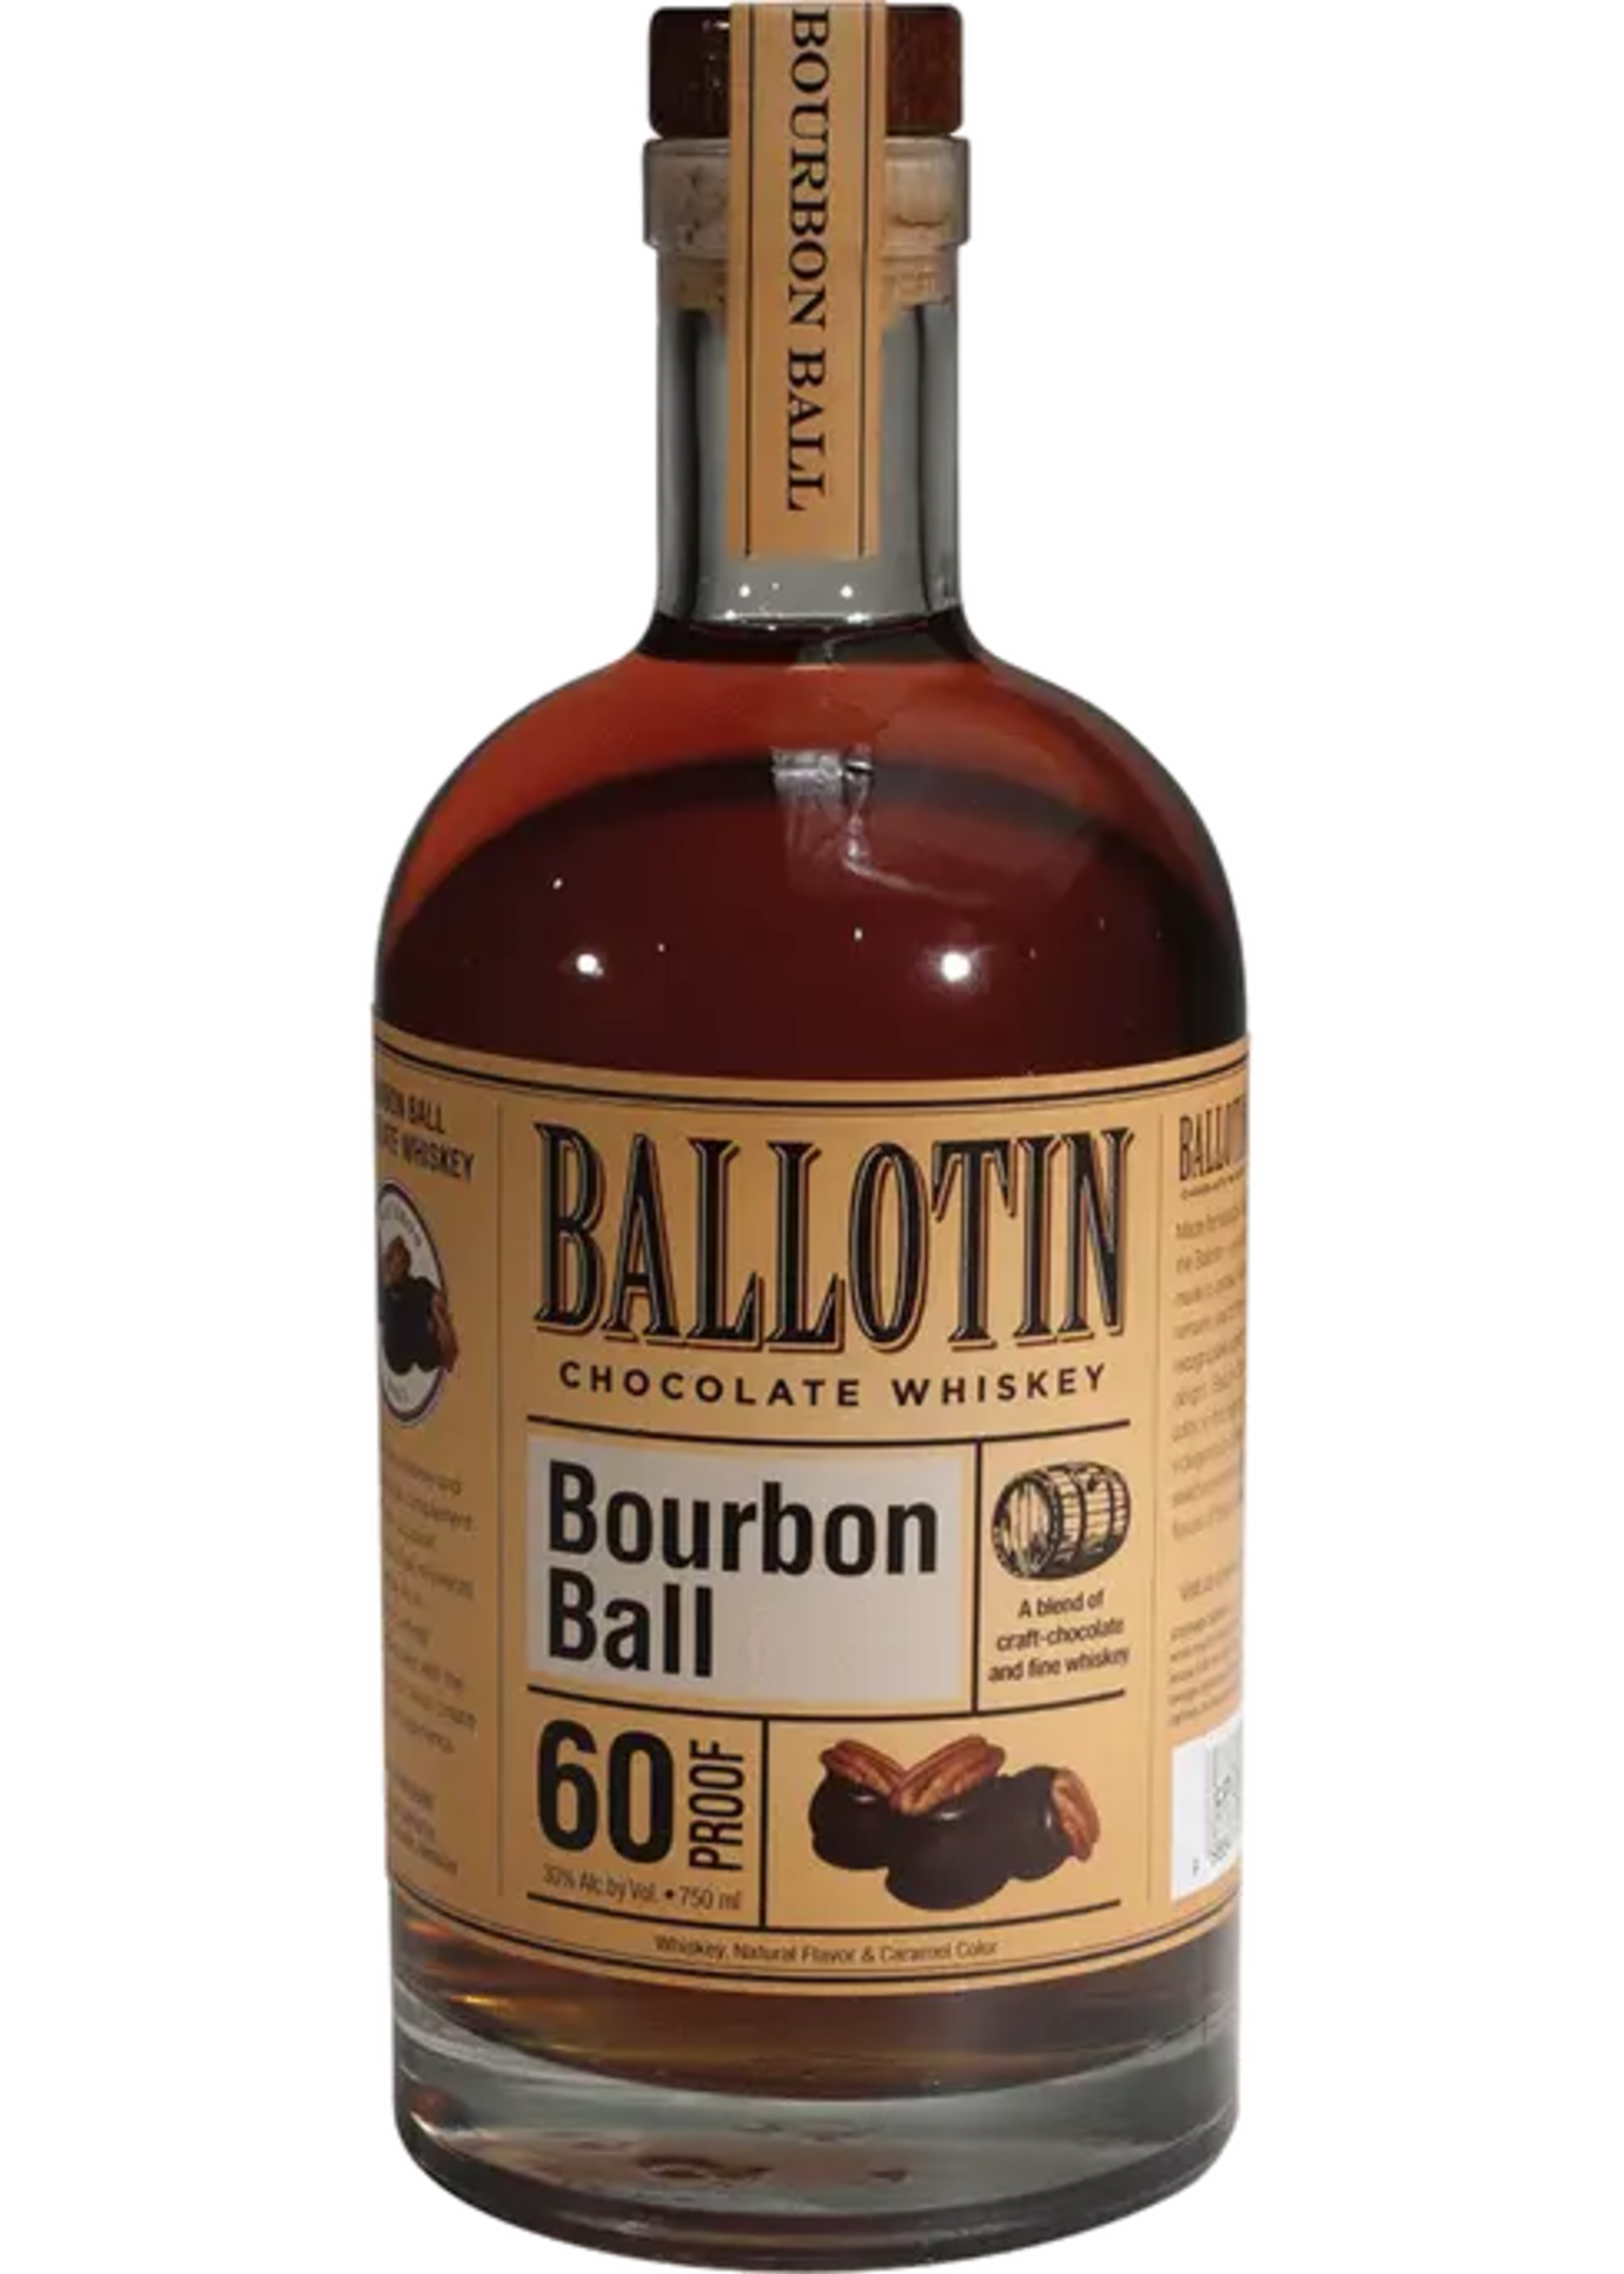 Ballotin Bourbon Ball Chocolate Whiskey 60Proof 750ml